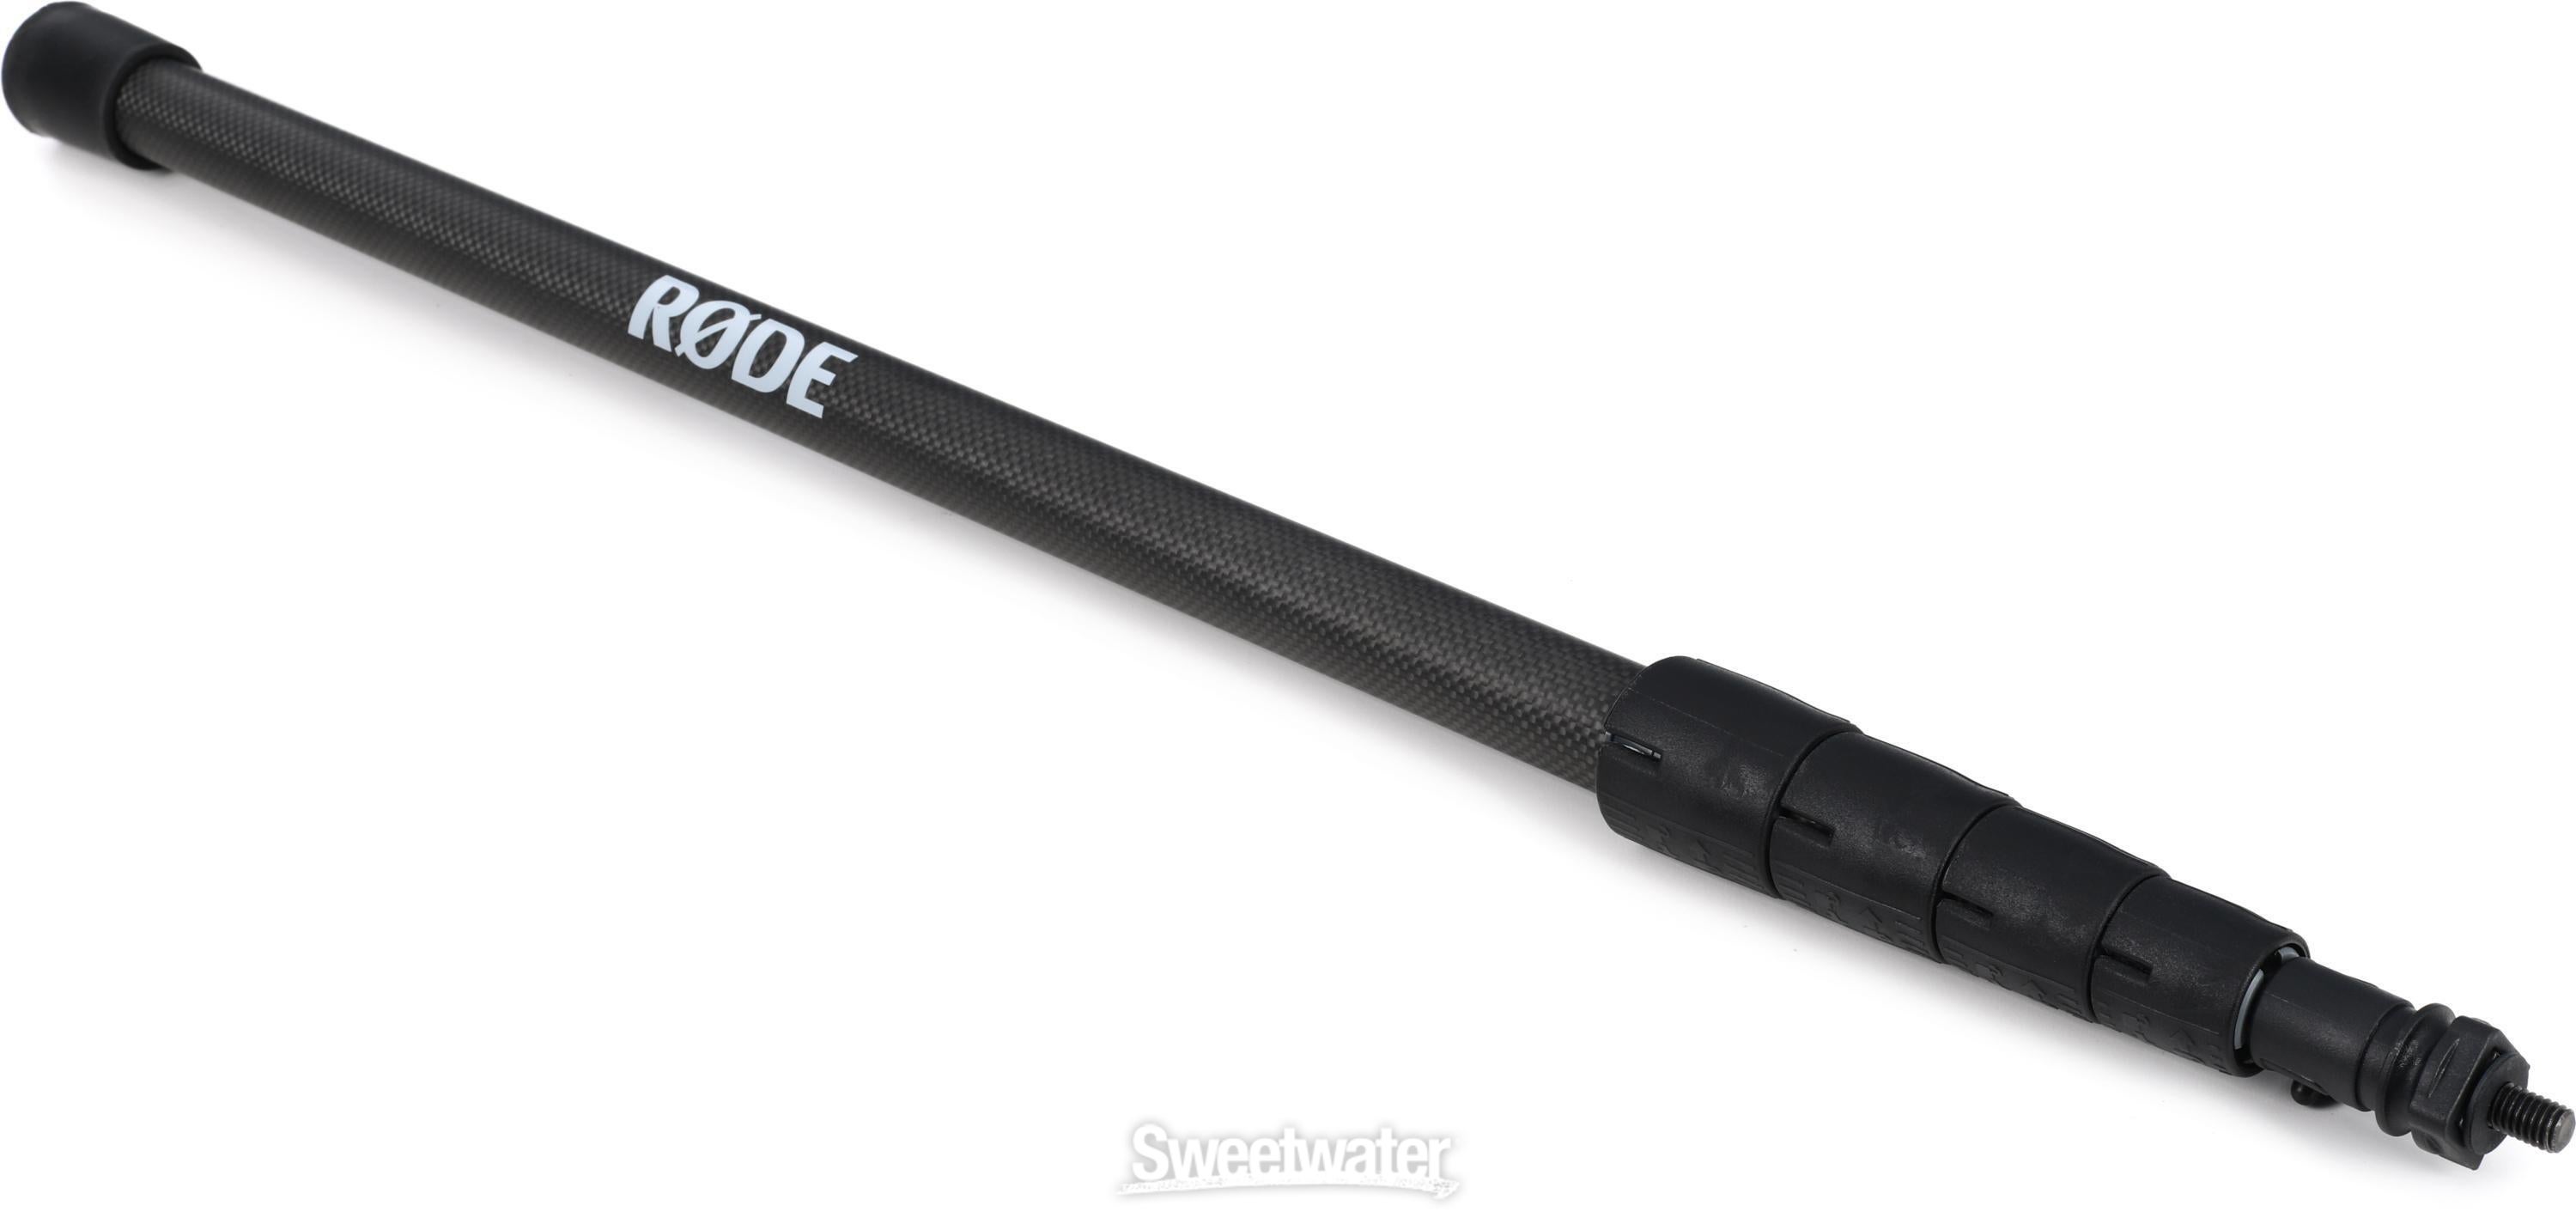 Rode Boompole Pro Carbon Fiber Microphone Boom Pole Reviews 